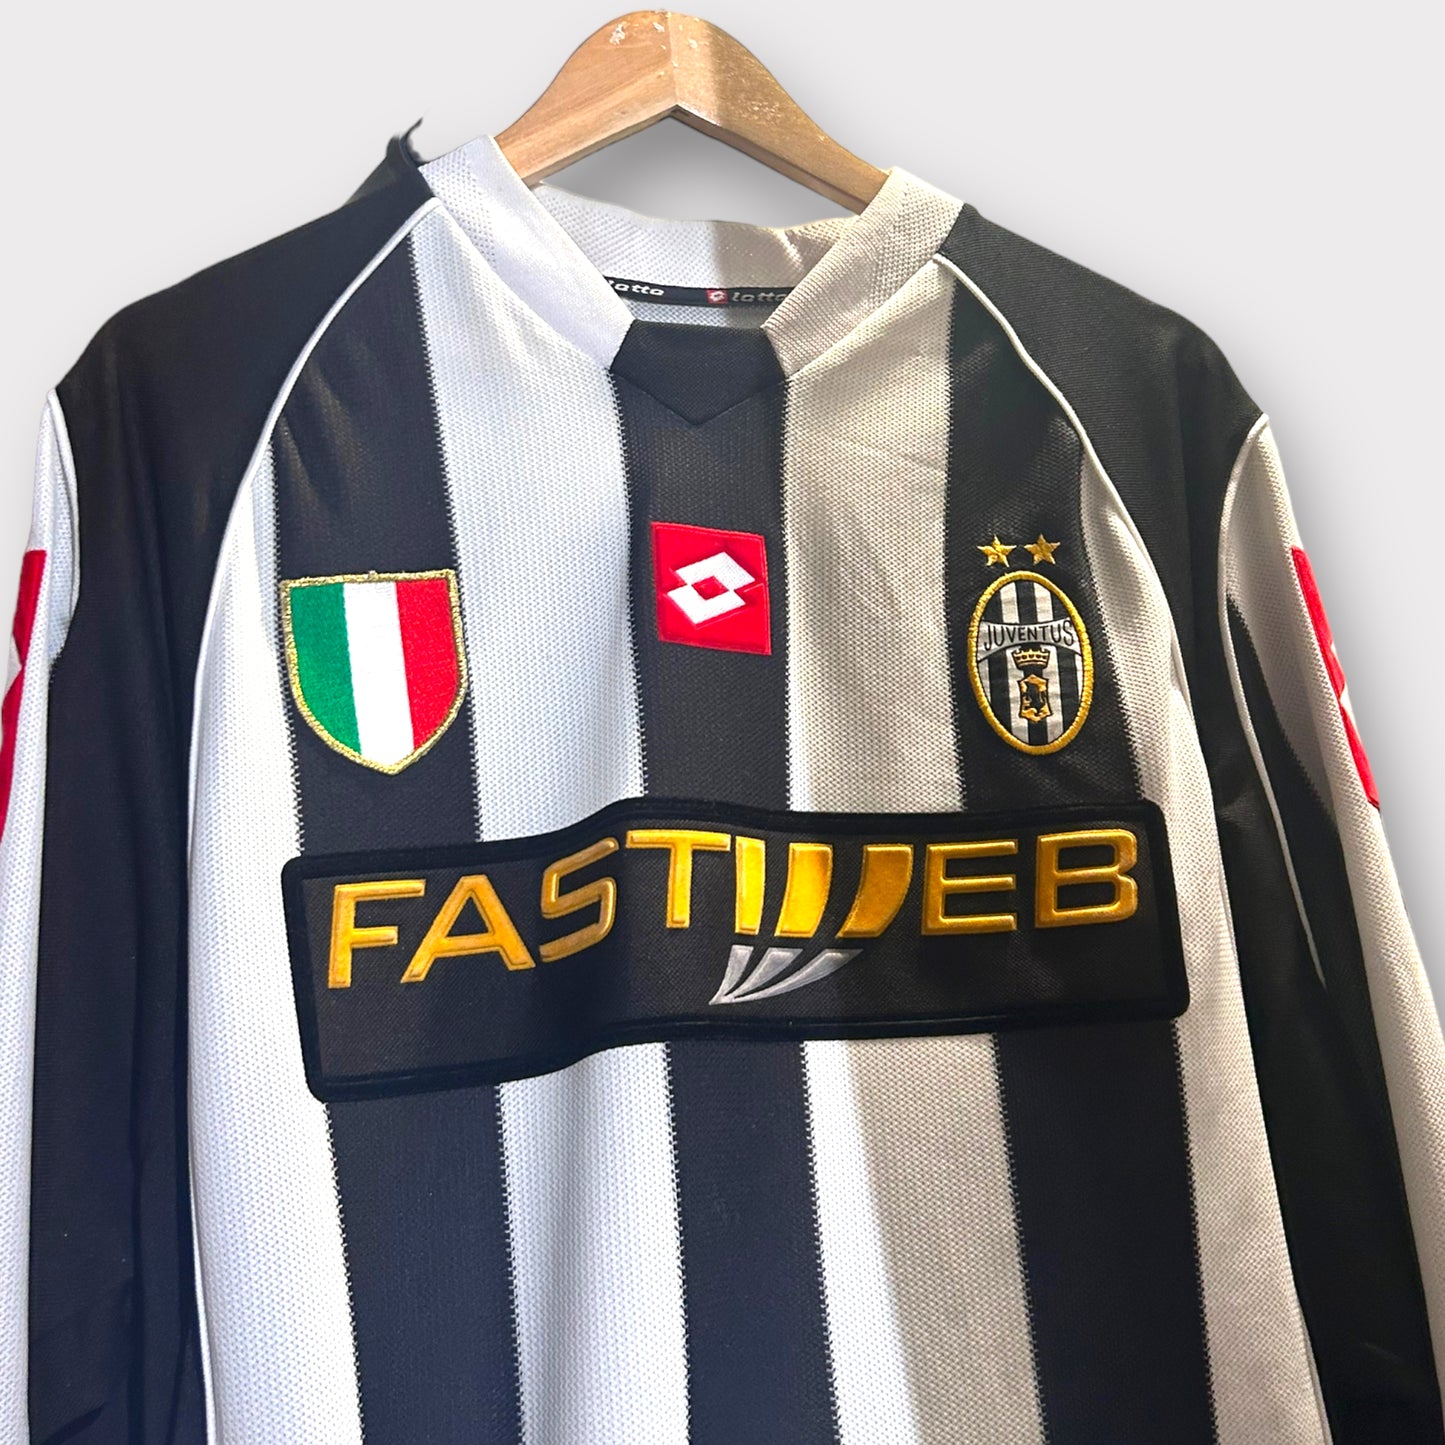 Juventus 2002/03 Home Shirt - Del Piero 10 (XL)